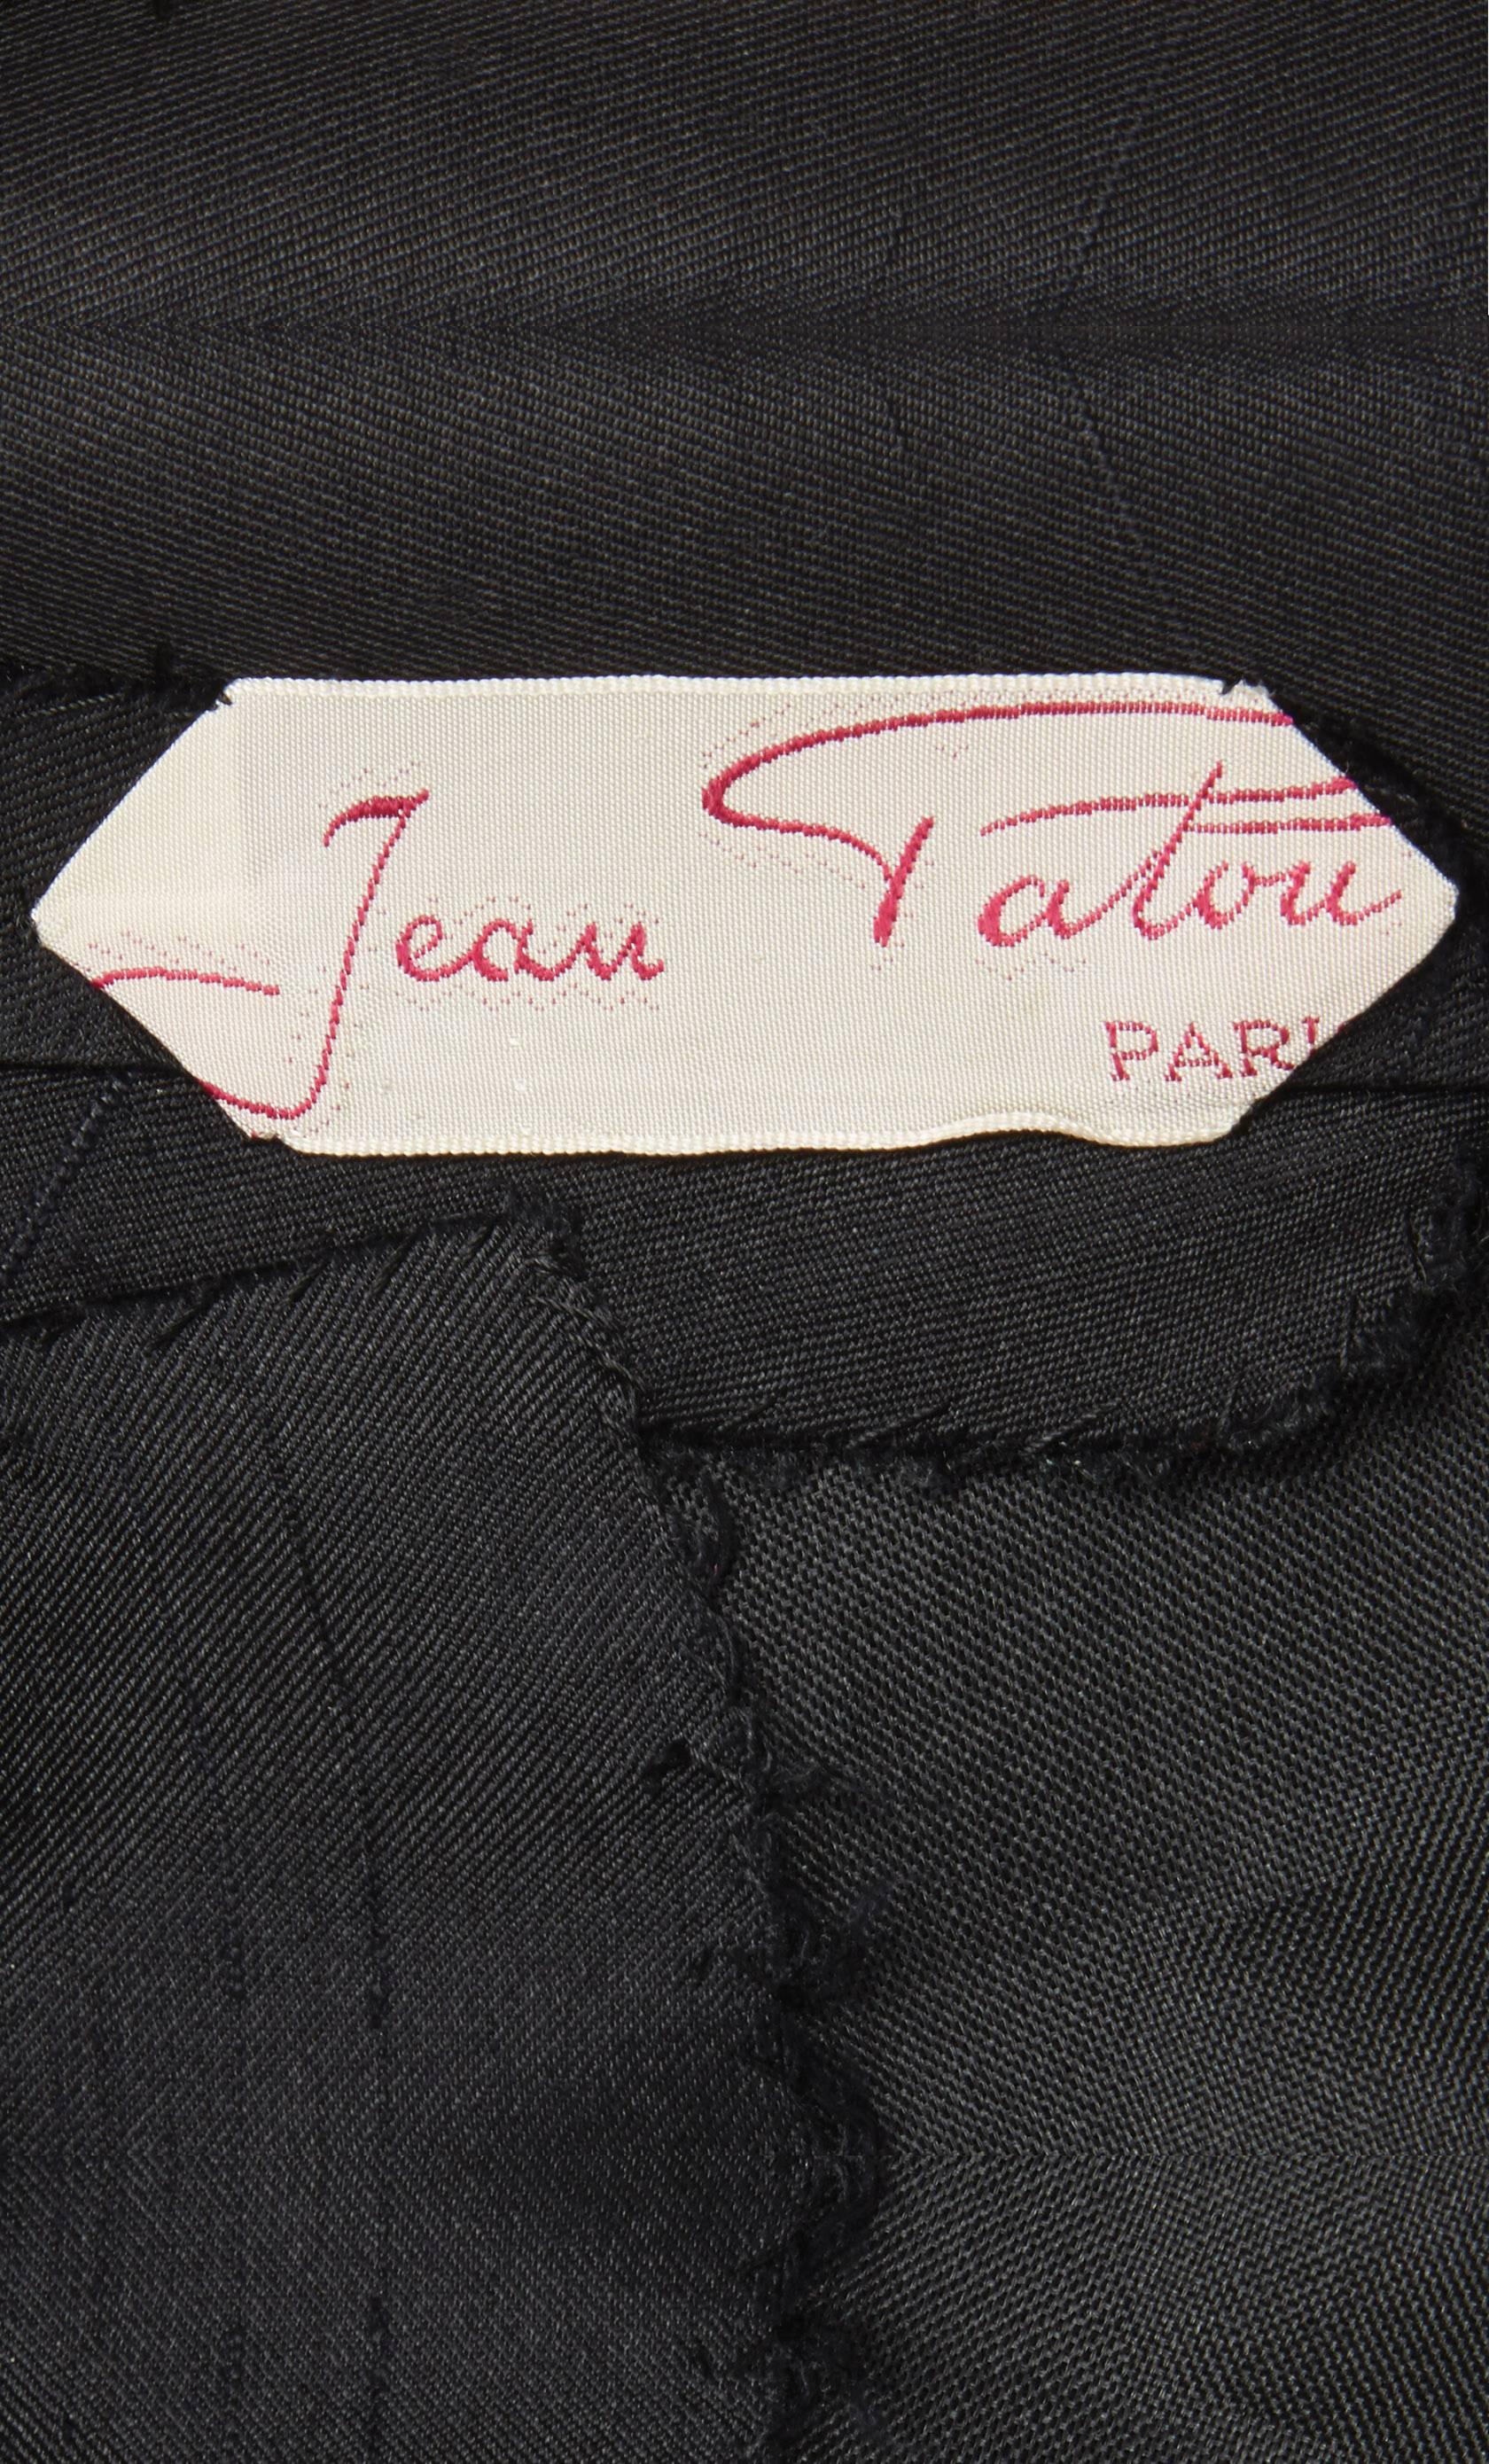 Women's Jean Patou haute couture black dress, circa 1958